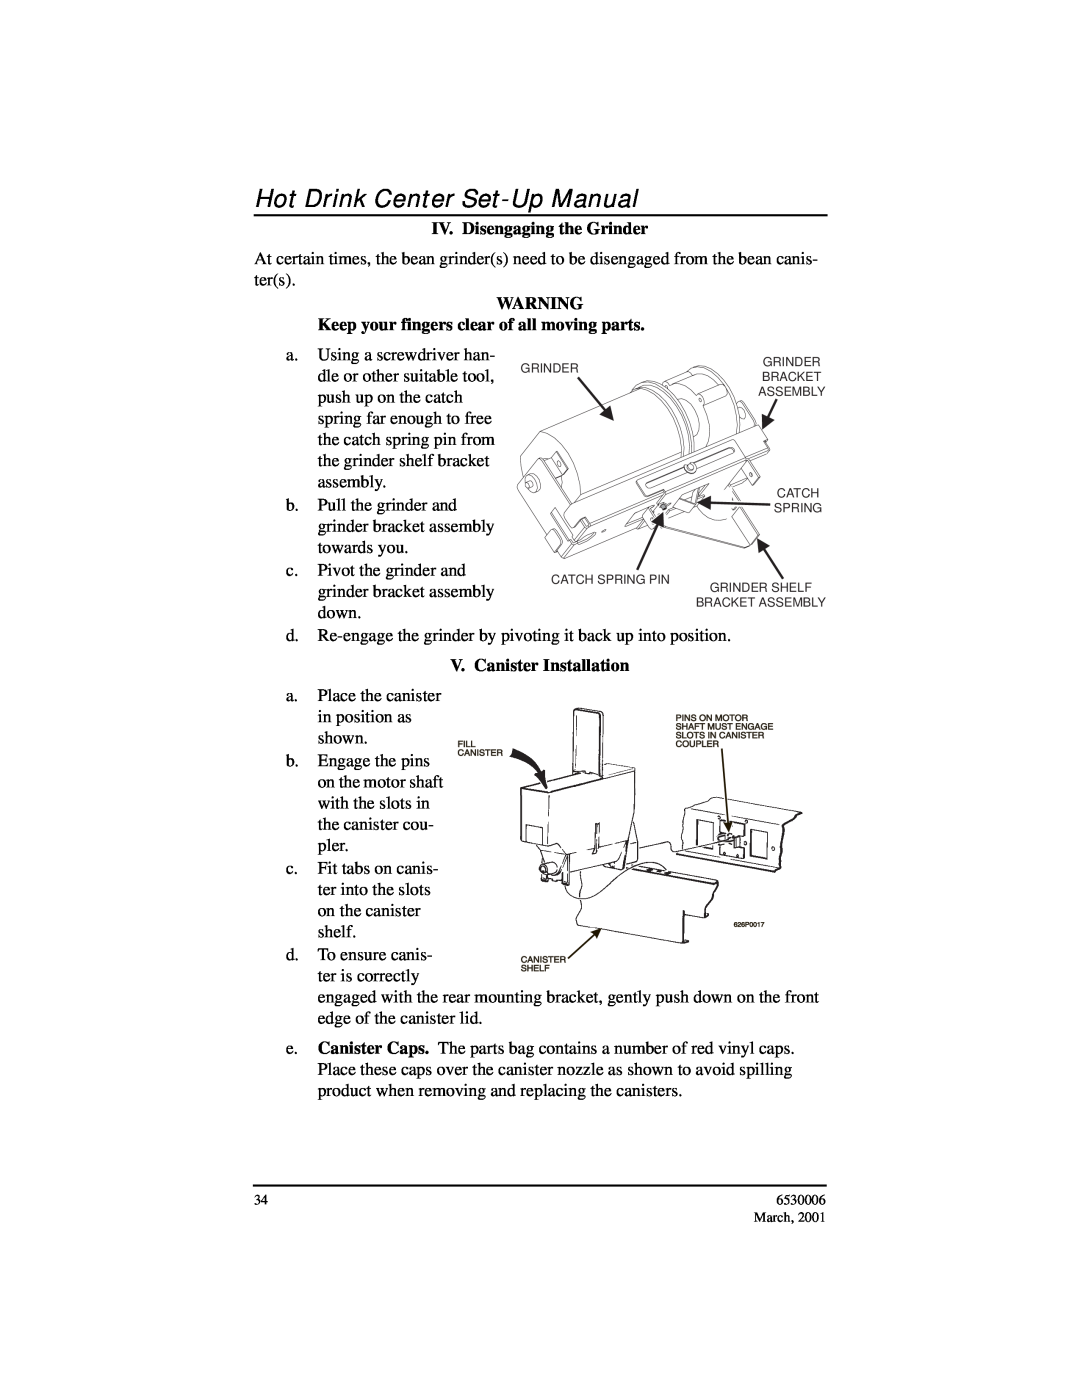 Crane Merchandising Systems manual Hot Drink Center Set-Up Manual, IV. Disengaging the Grinder, V. Canister Installation 